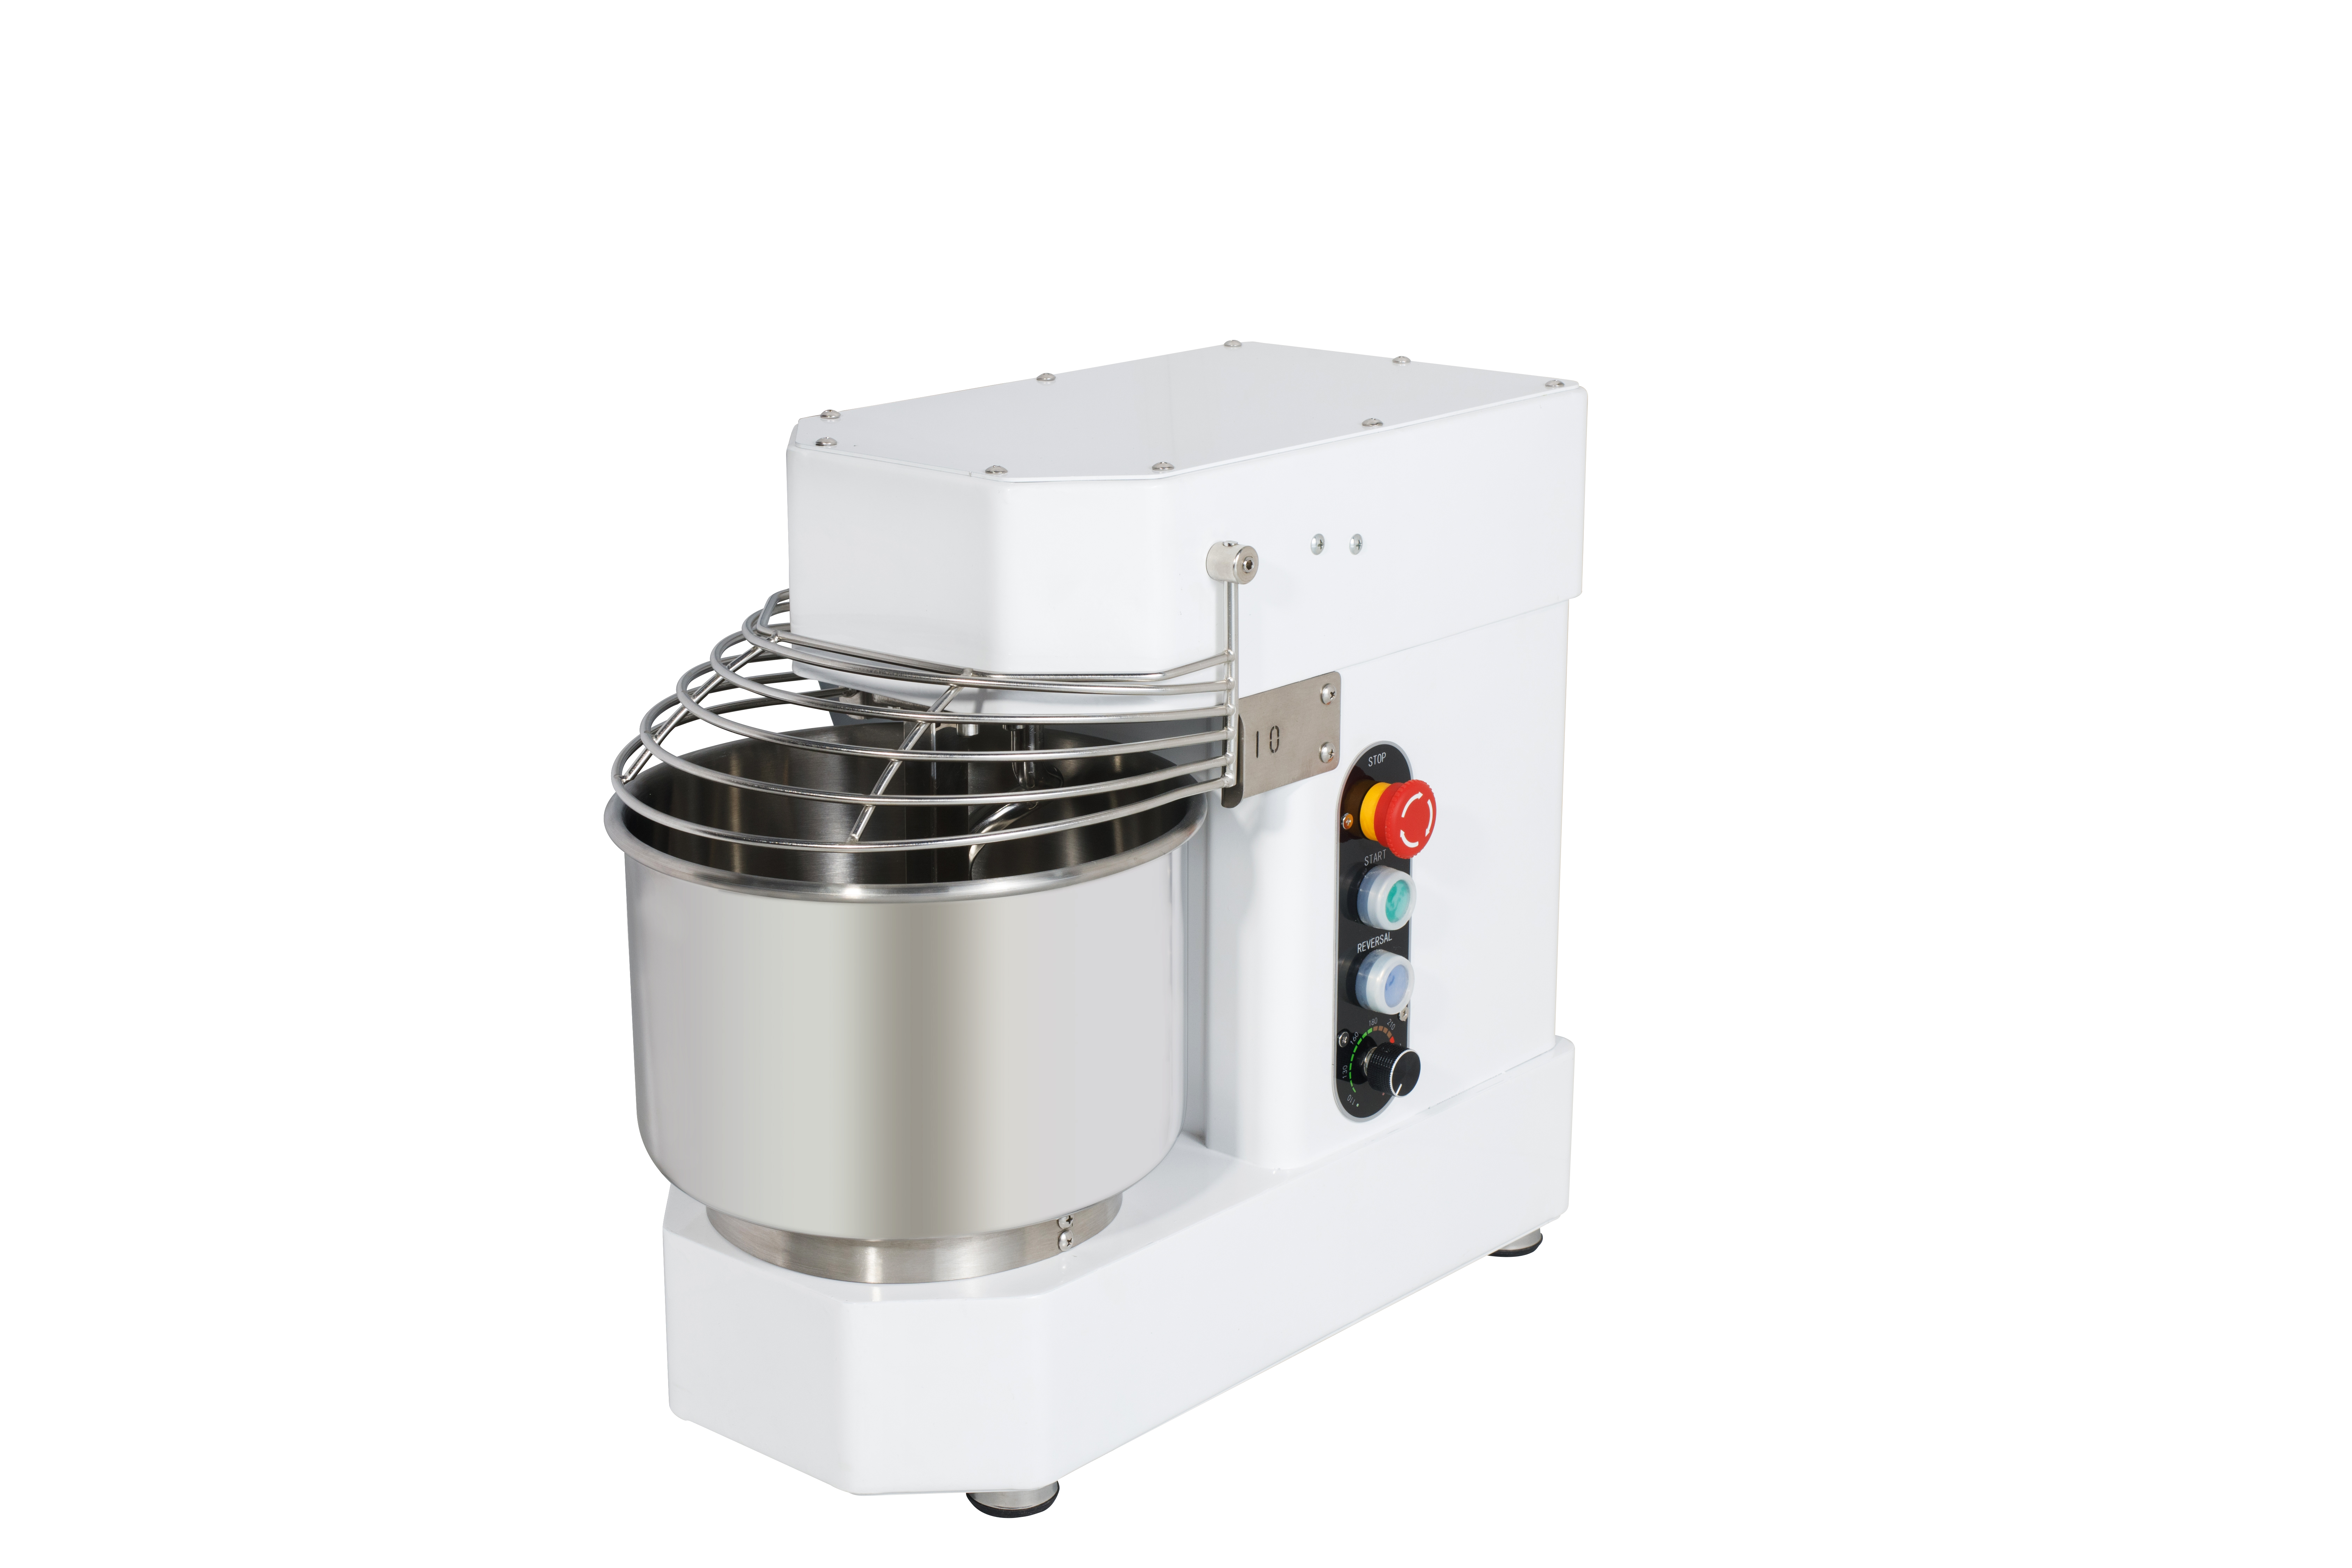 10kg automatic dough mixer for home